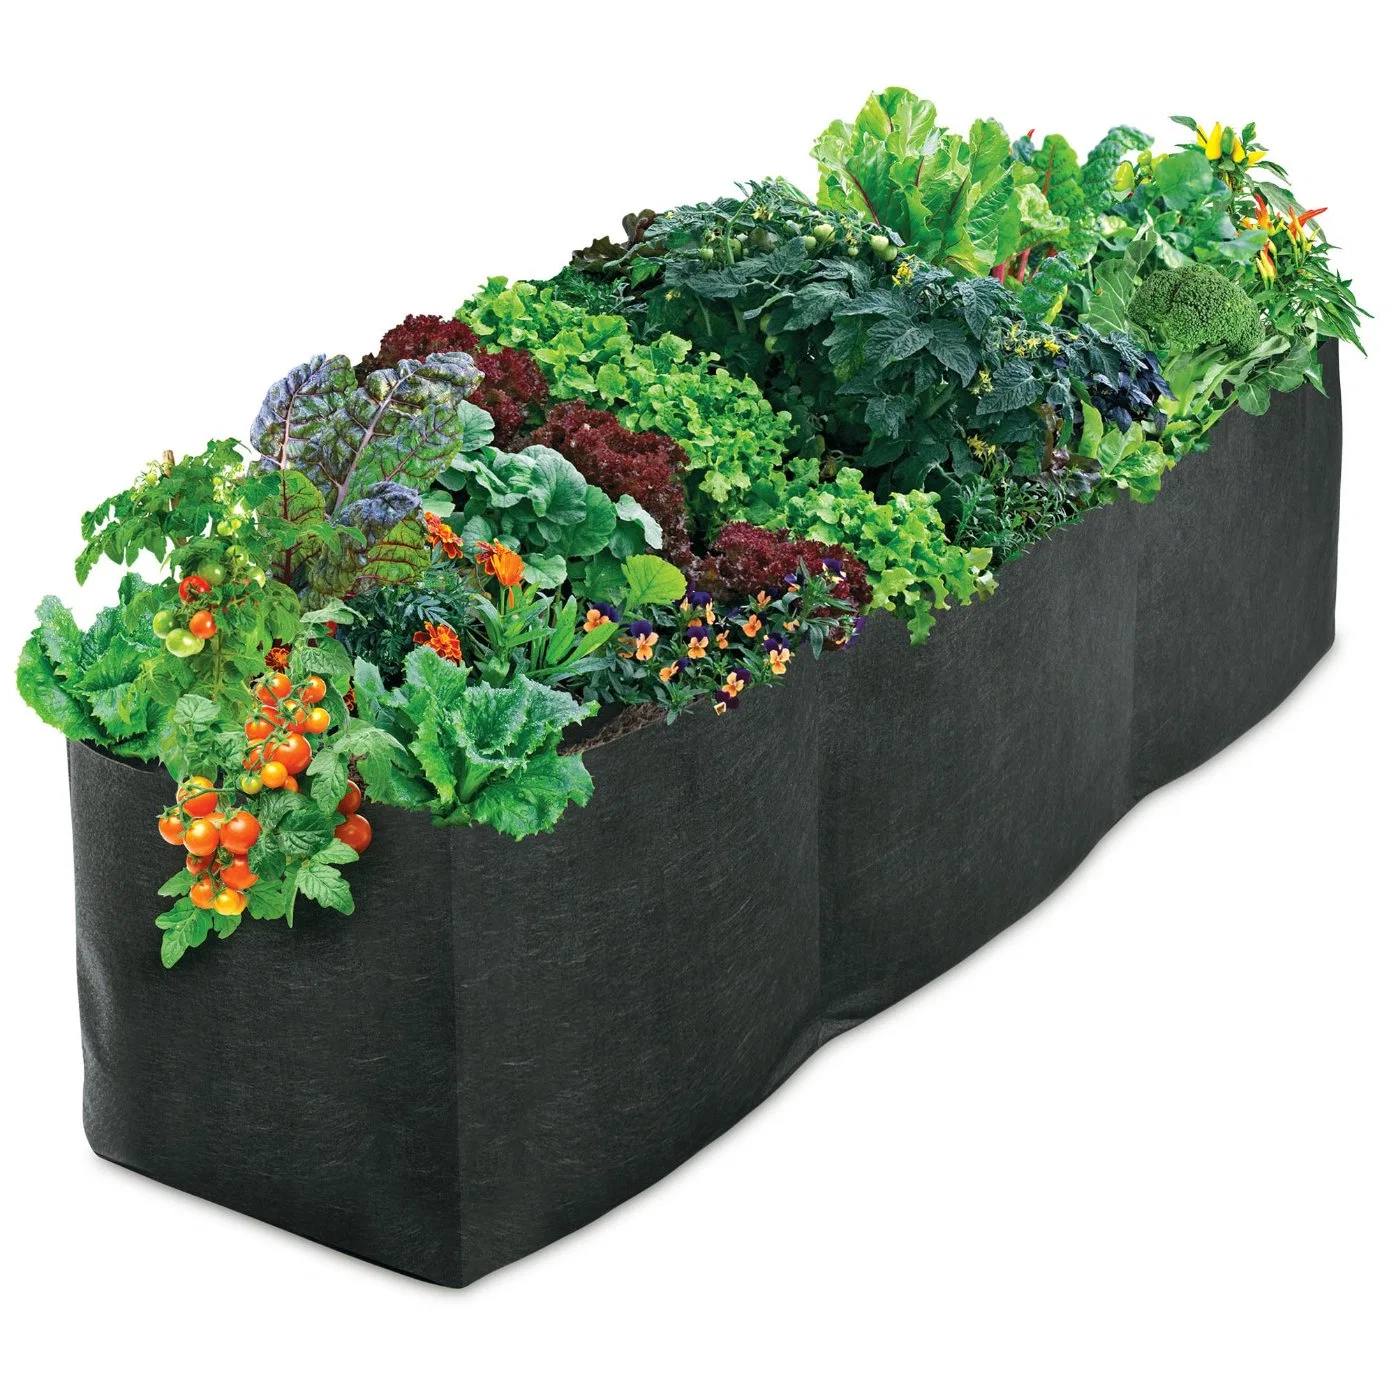 Black Color Aeration Fabric Pot Grow Bed/Raised Vegetable Flower Garden